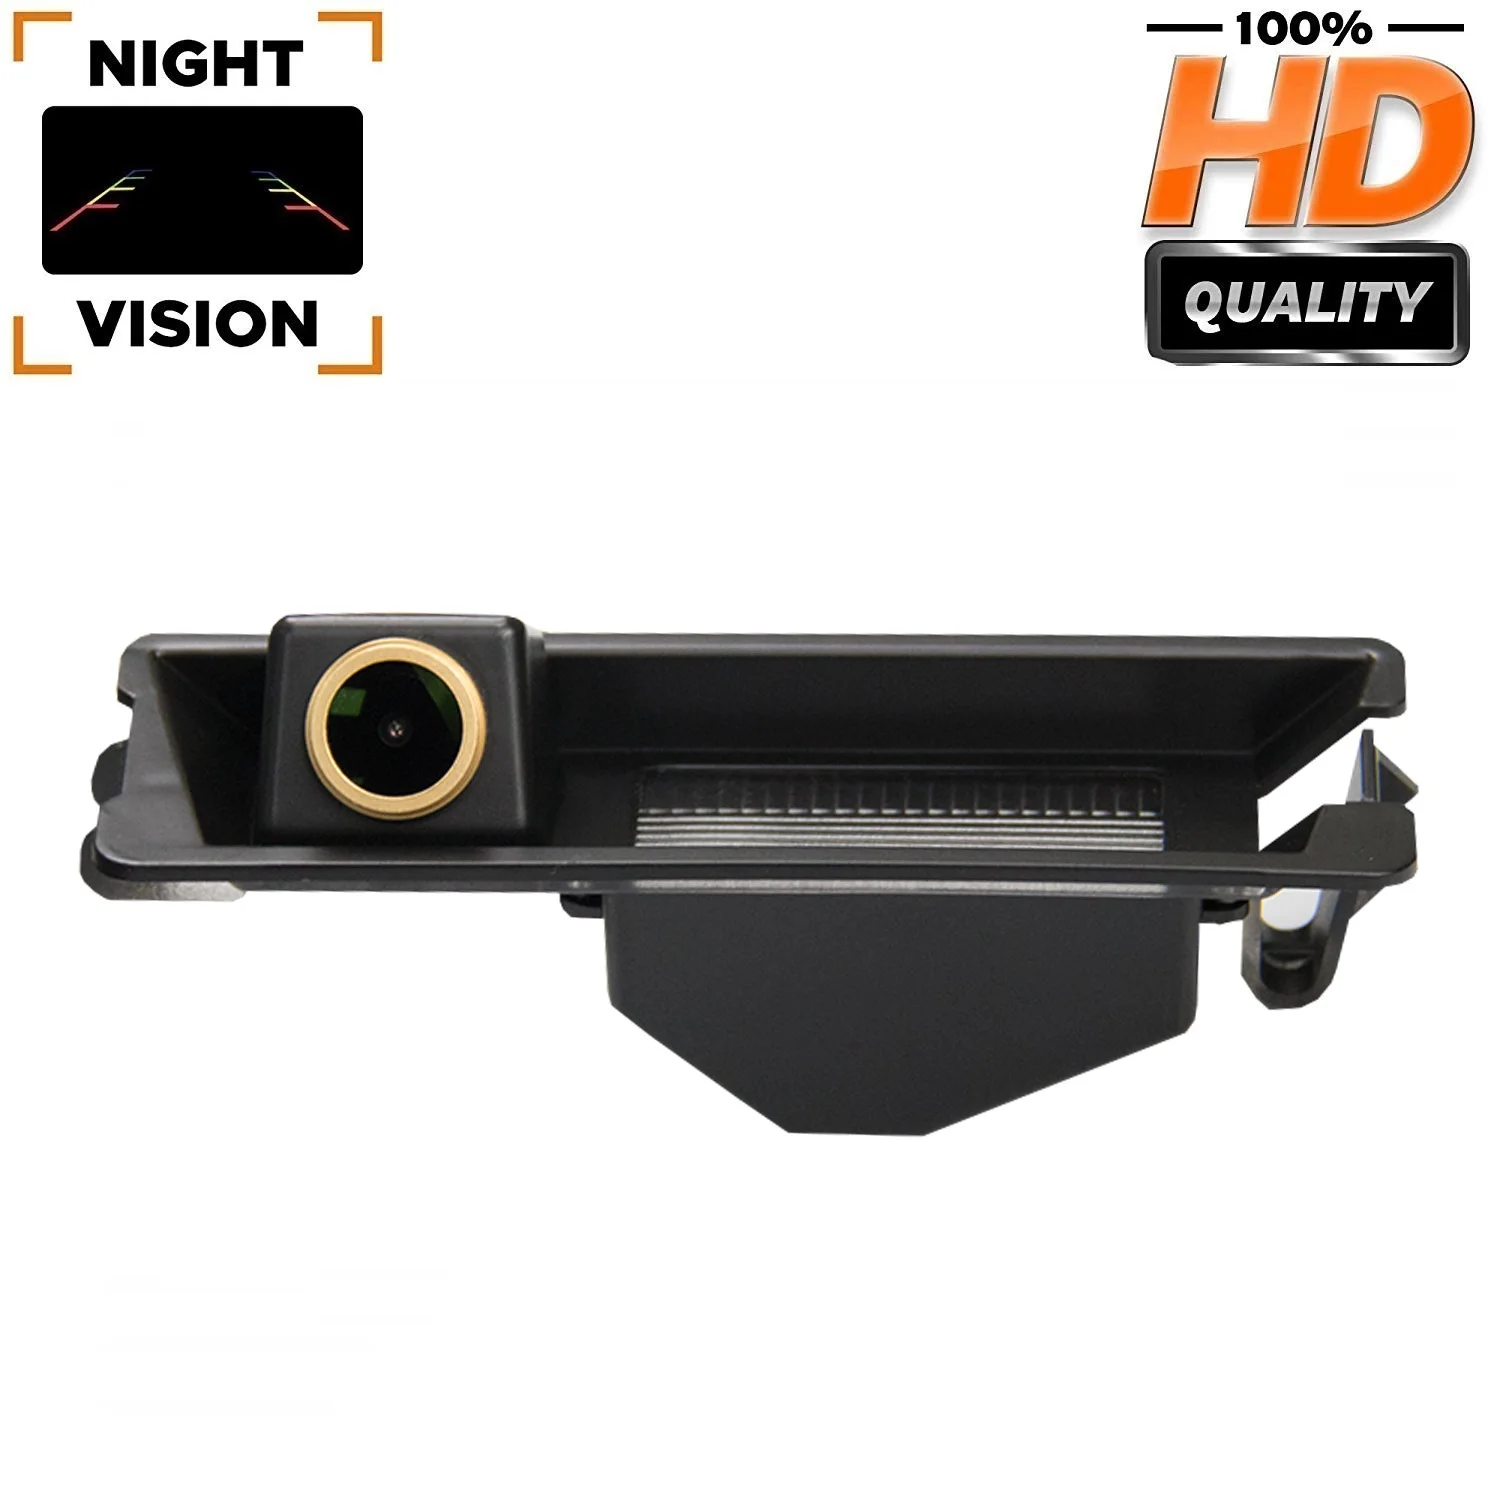 

HD720p Rear View Night Vison camera for March Renault Logan Sandero dacia Sander Stepway Pulse 2013-2014 Reversing Backup Camera